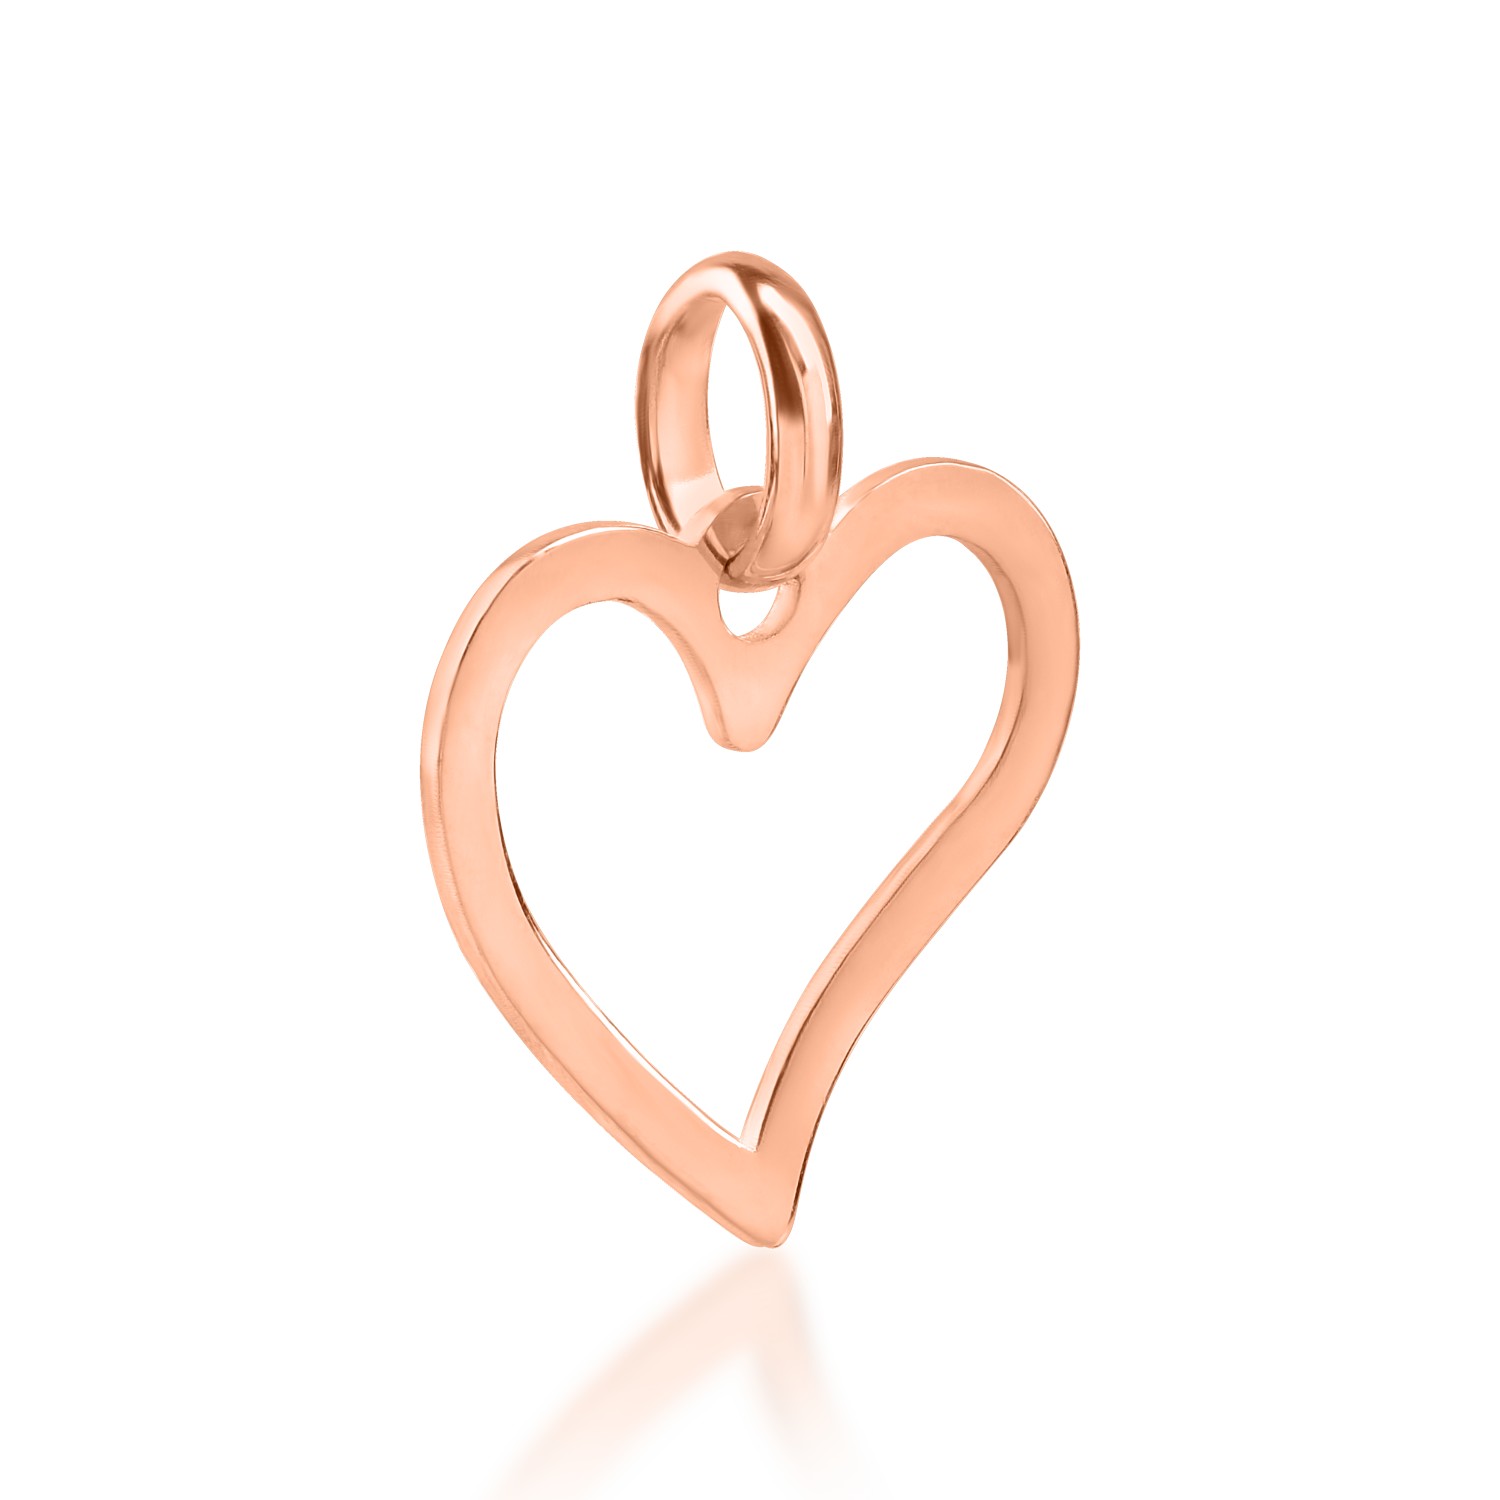 Rose gold heart pendant